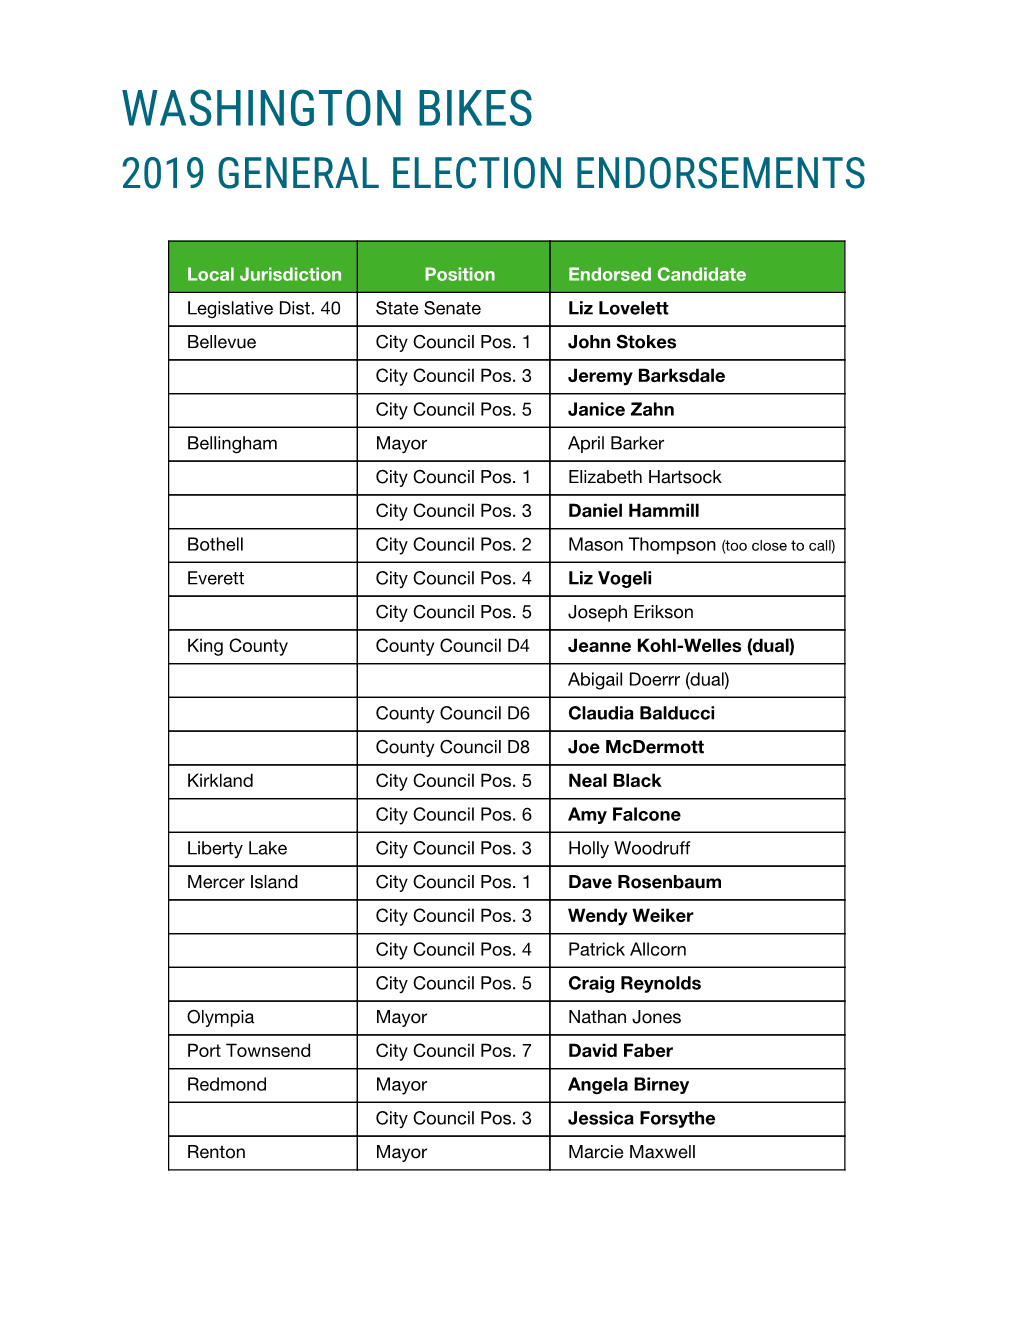 Washington Bikes 2019 General Election Endorsements